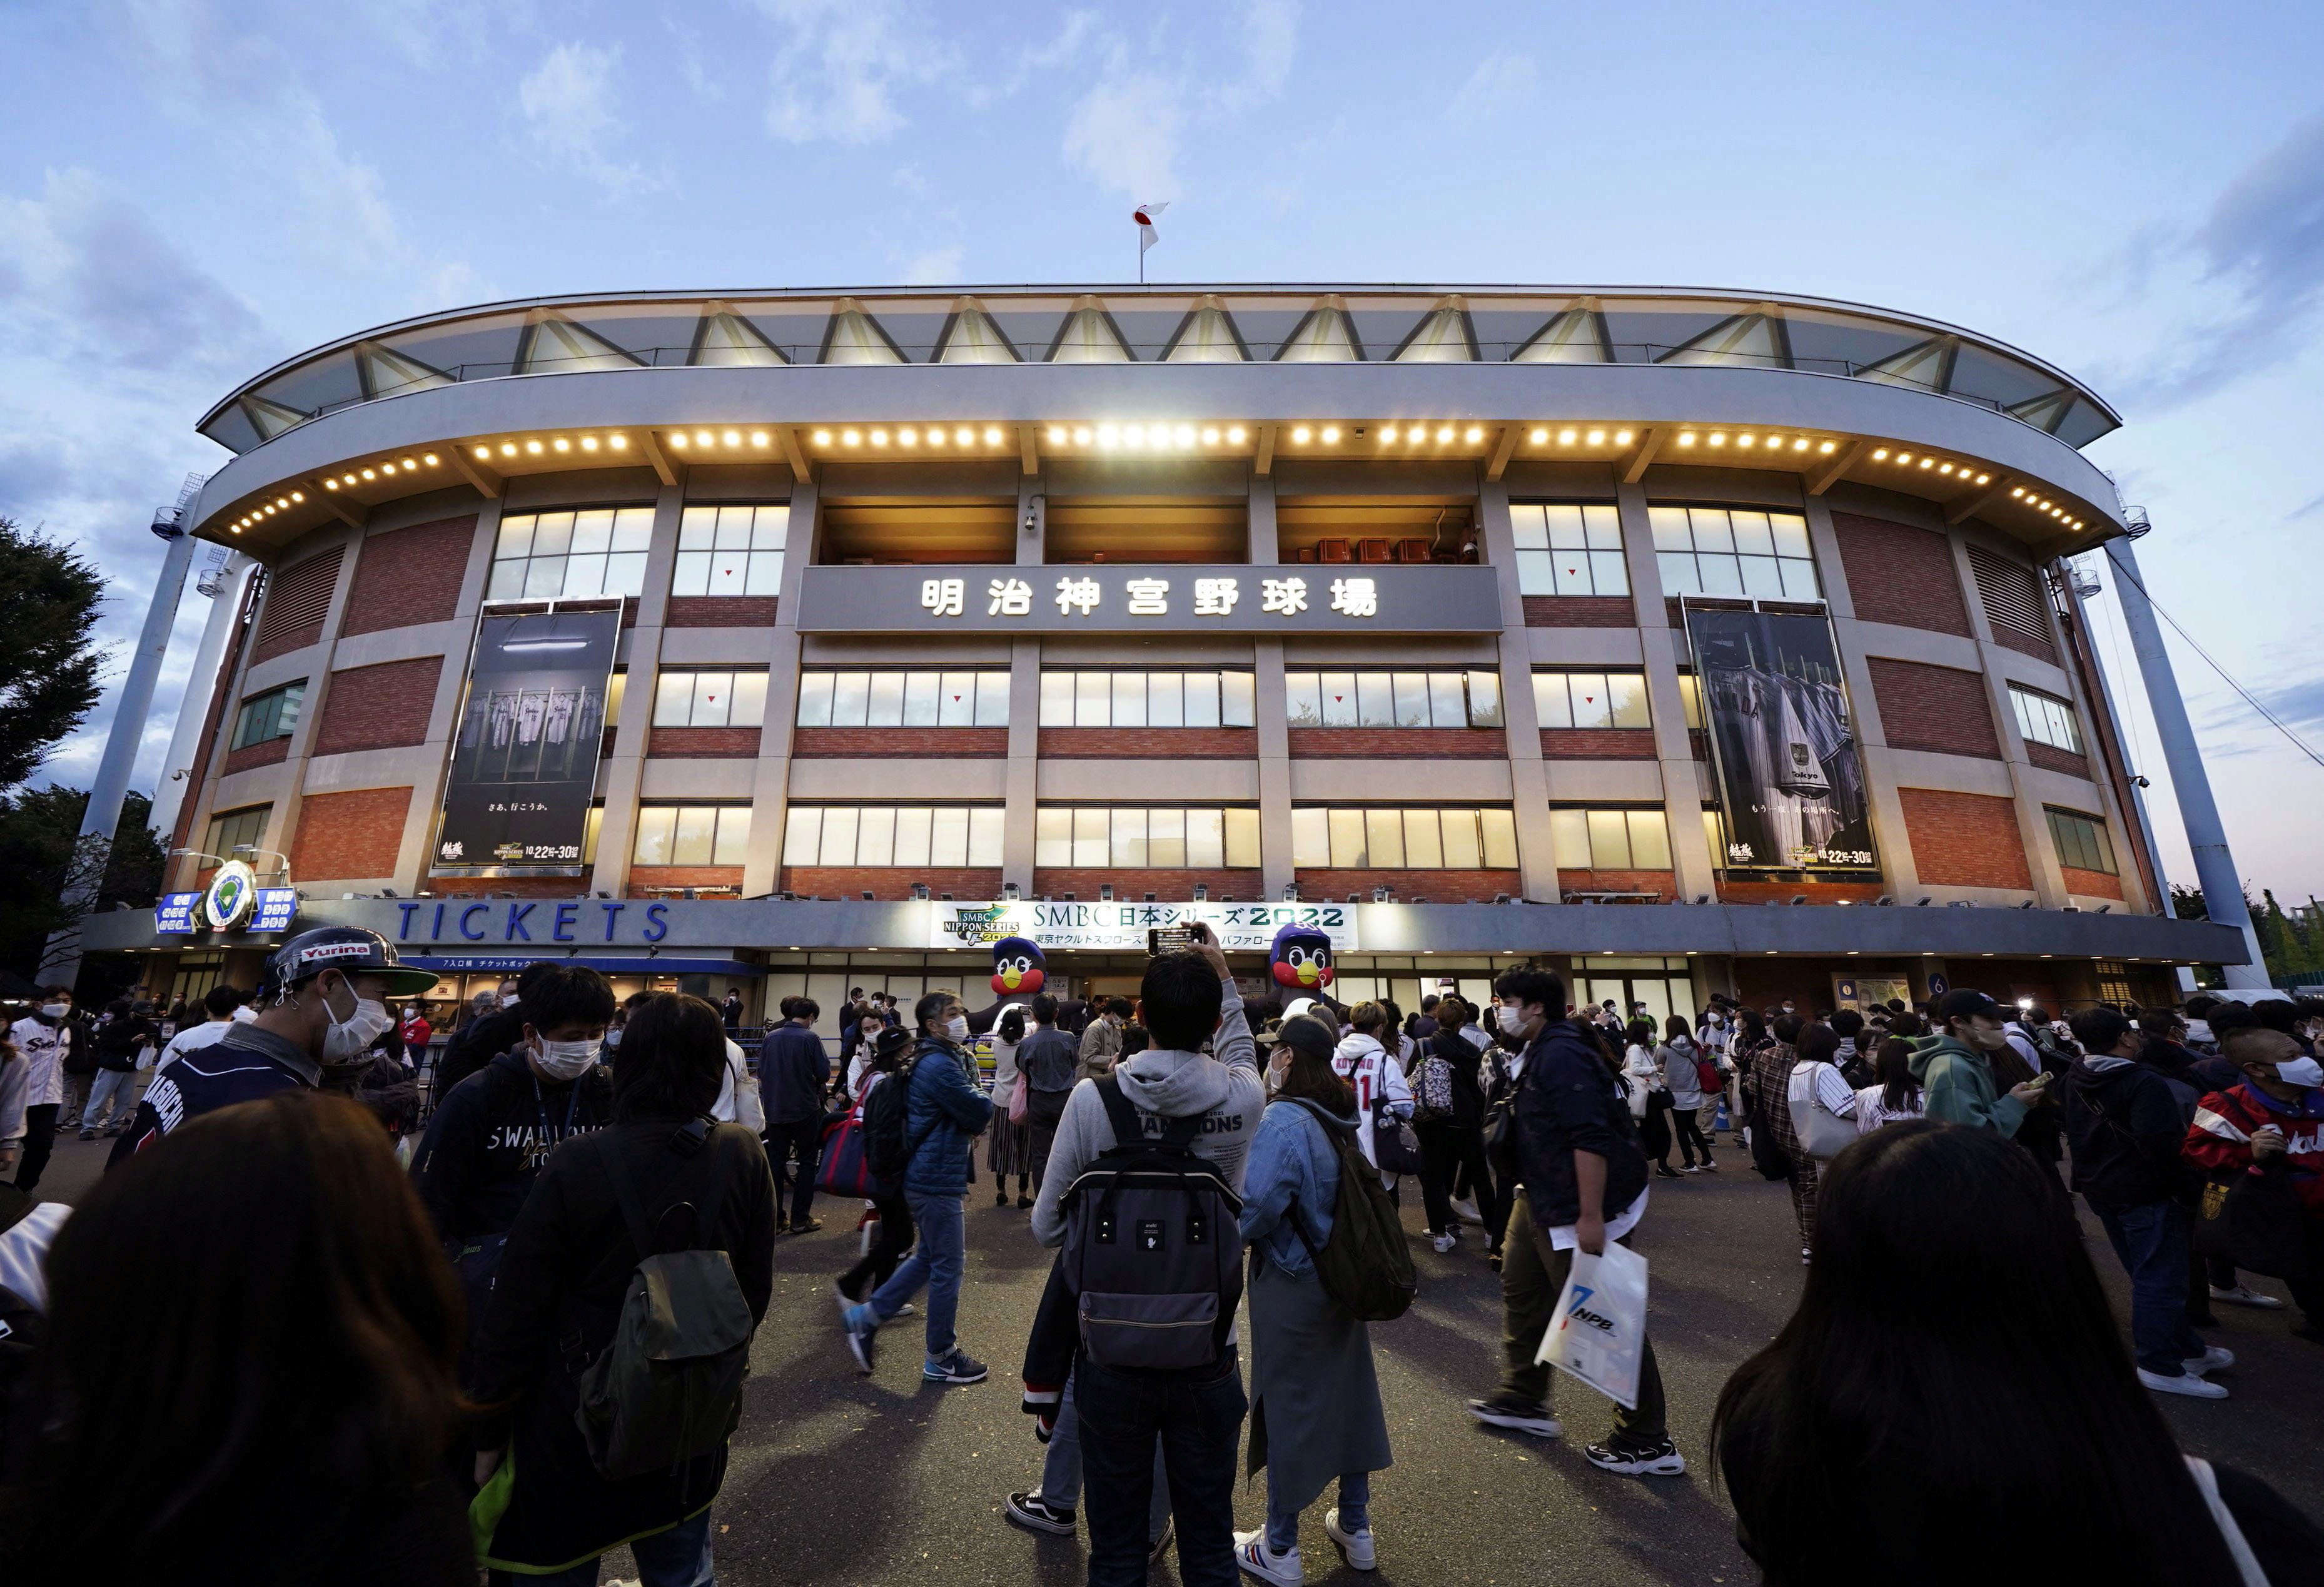 General view shows Meiji Jingu Stadium before a professional baseball league game in Tokyo